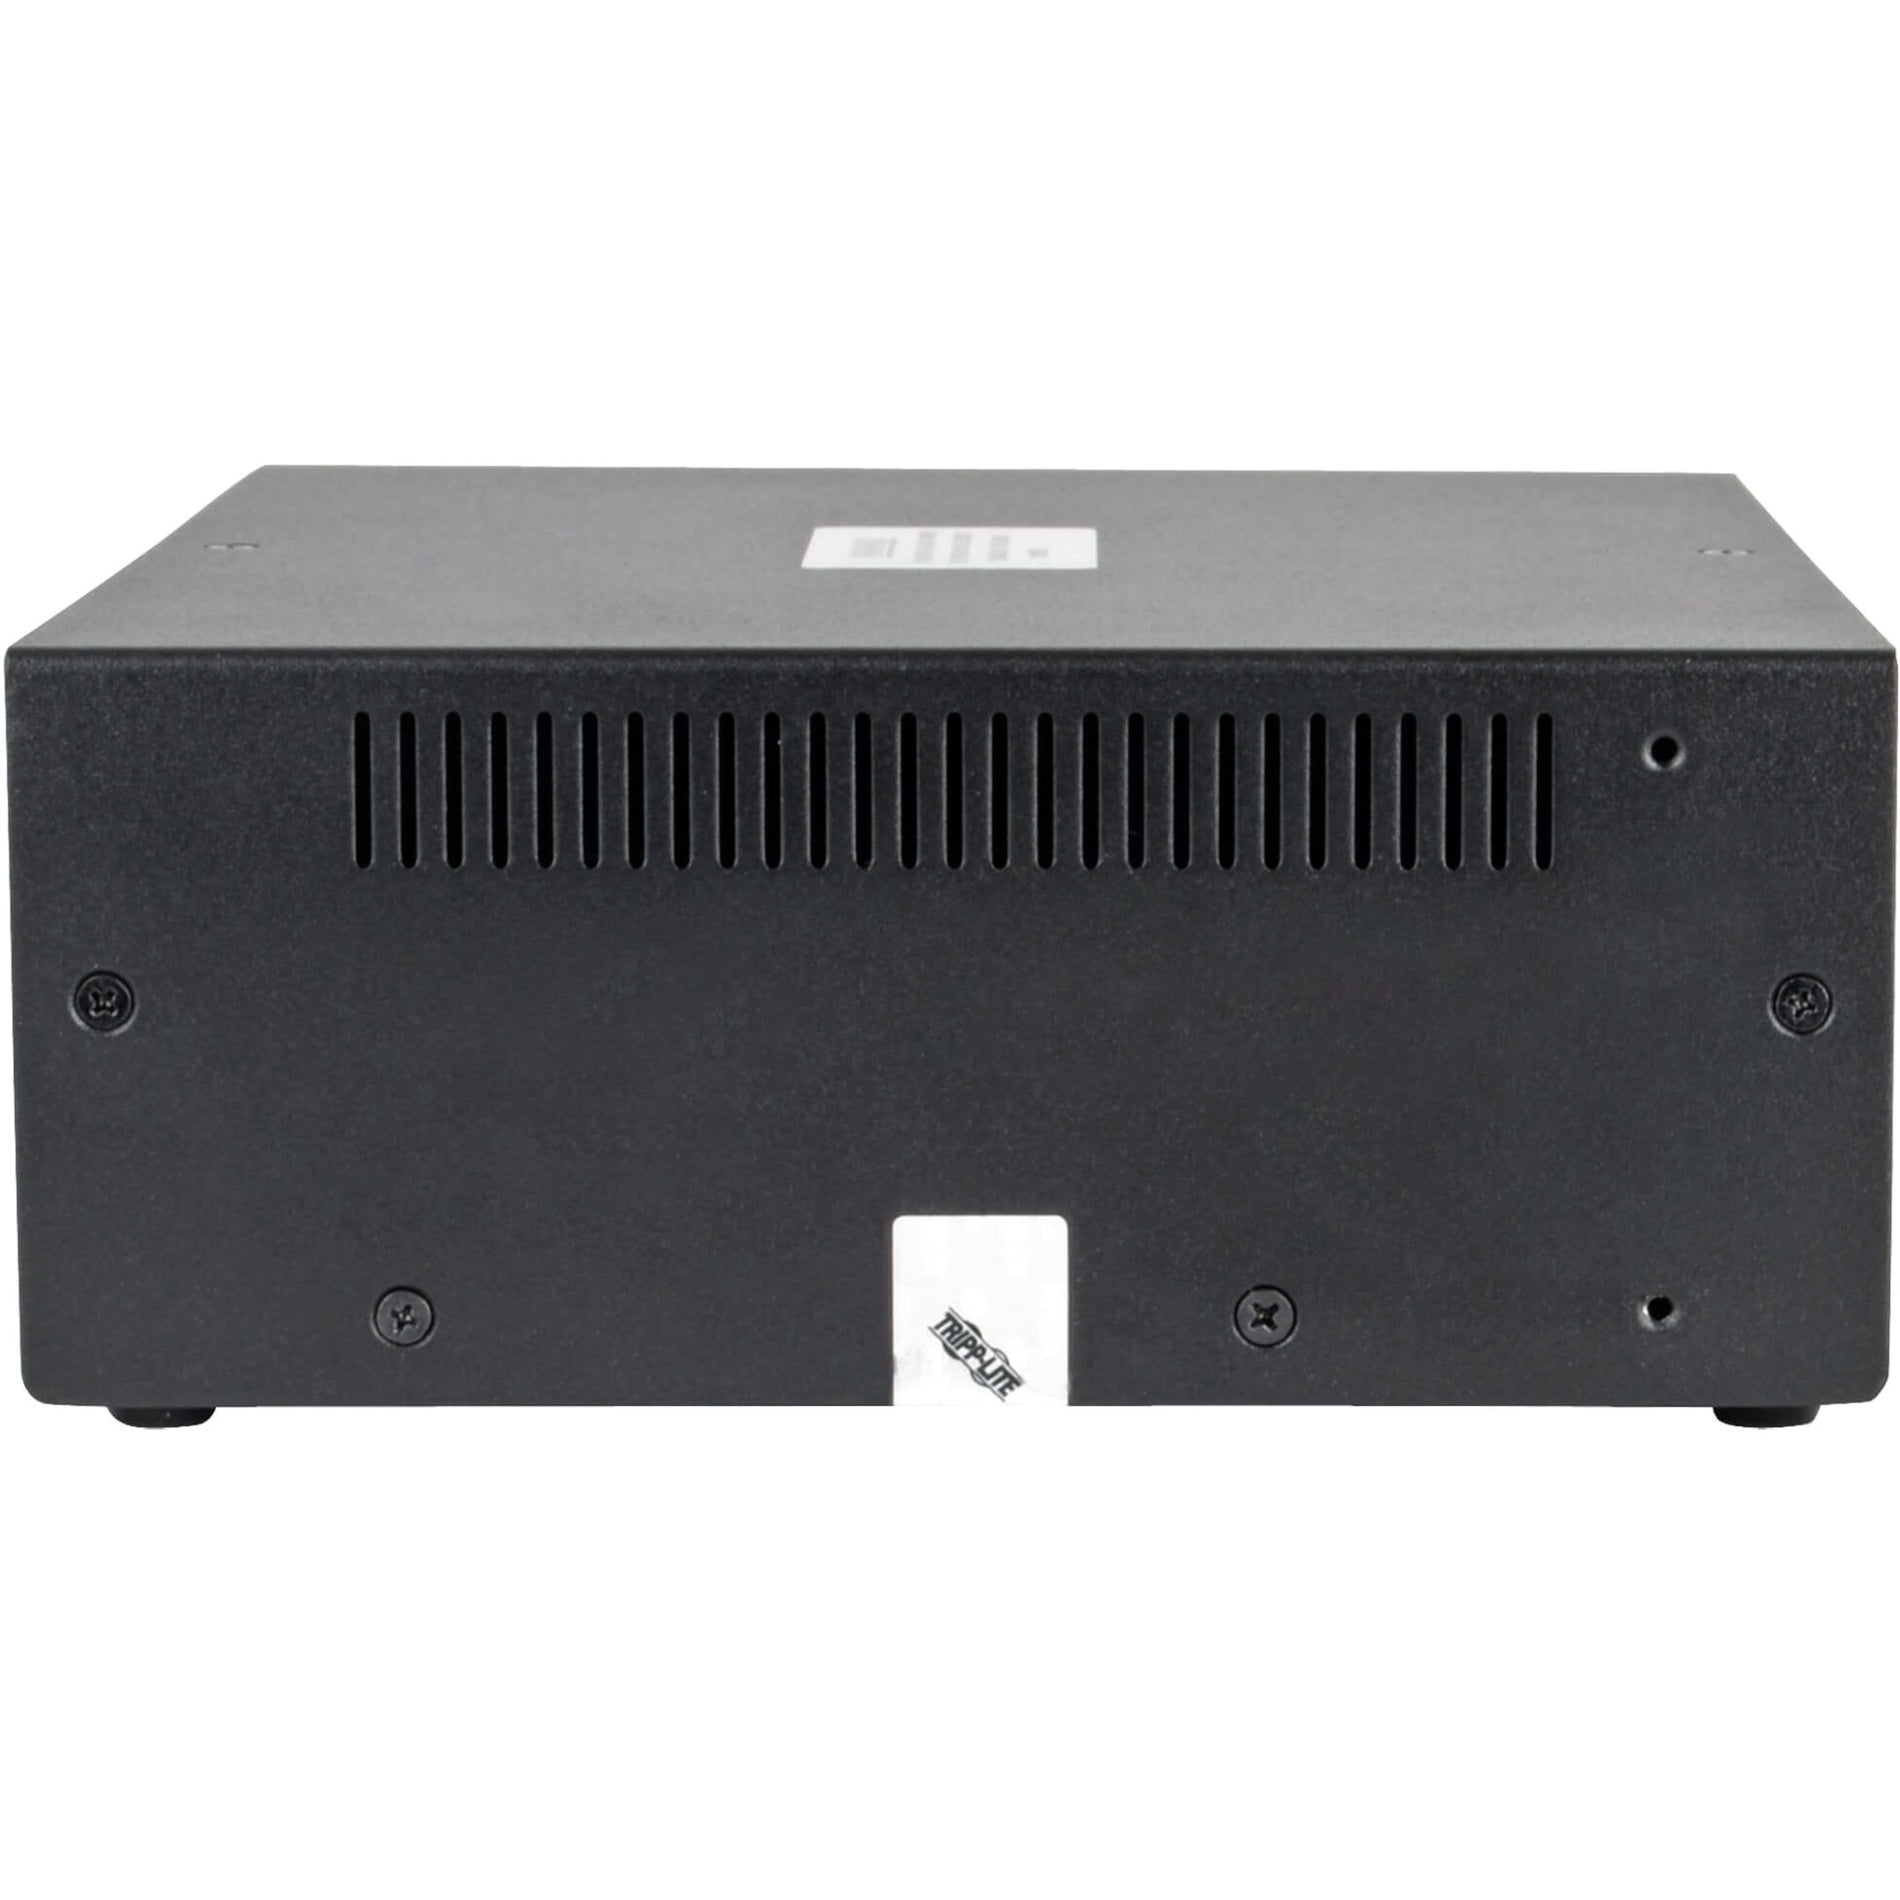 Tripp Lite B002-DV2AC4 4-Port NIAP PP3.0-Certified DVI-I KVM Switch, Maximum Video Resolution 2560 x 1600, 3 Year Warranty